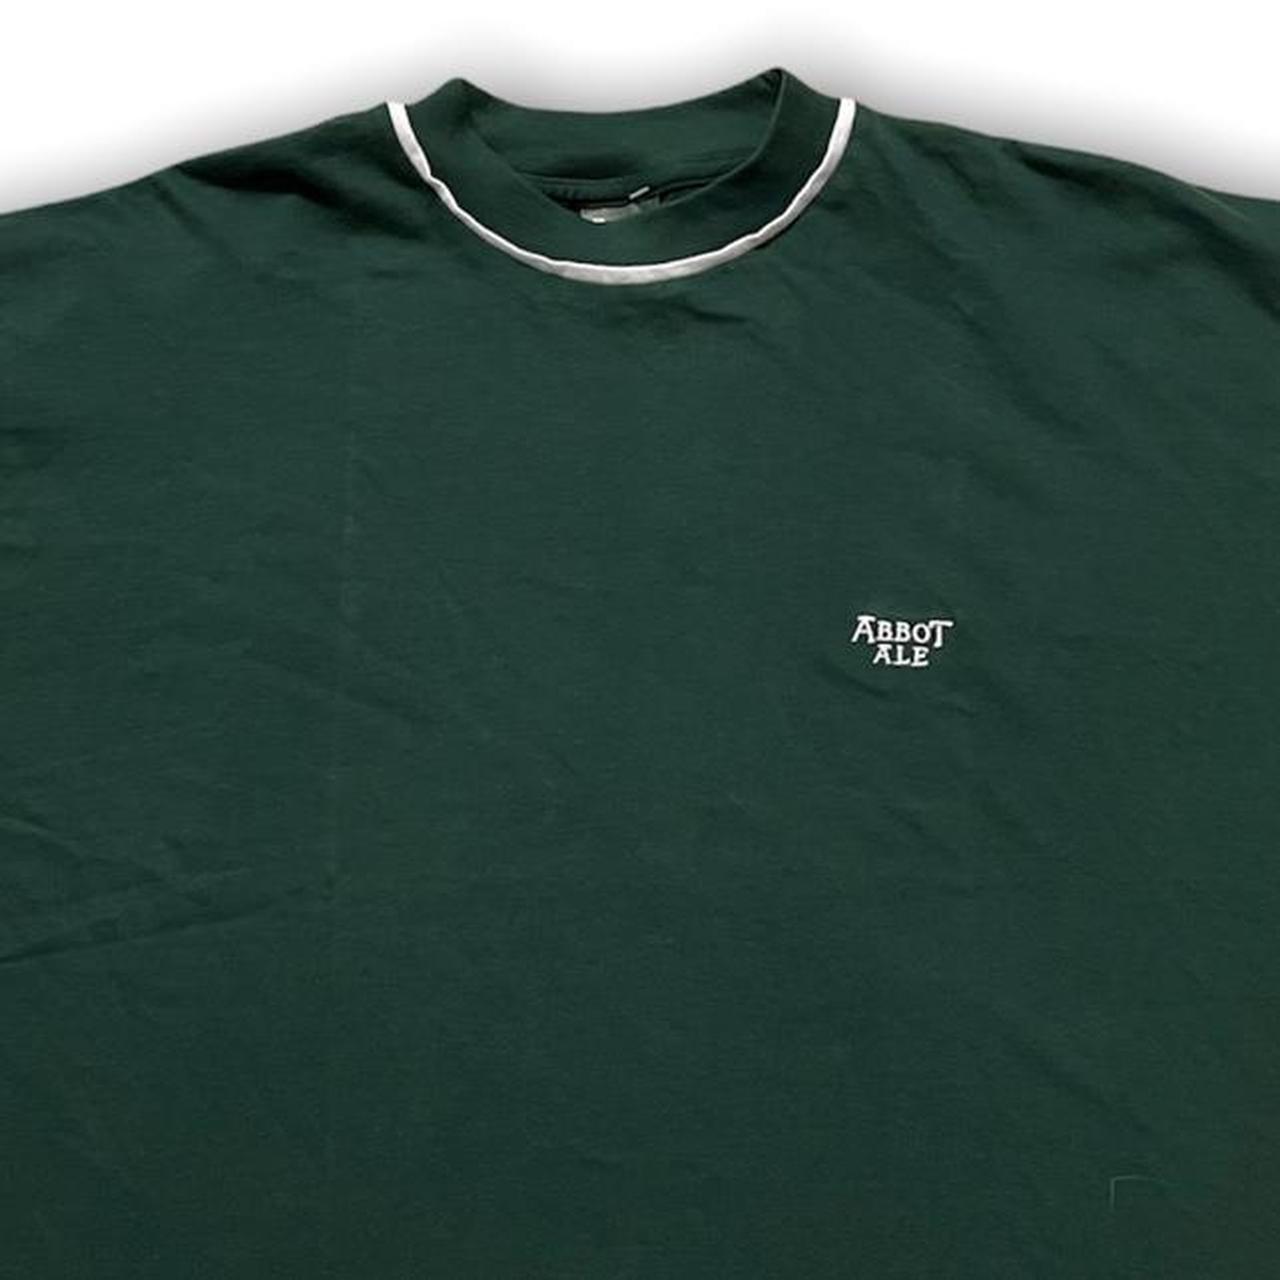 Abbot Ale || 90s vintage || green promo t shirt 🍻... - Depop